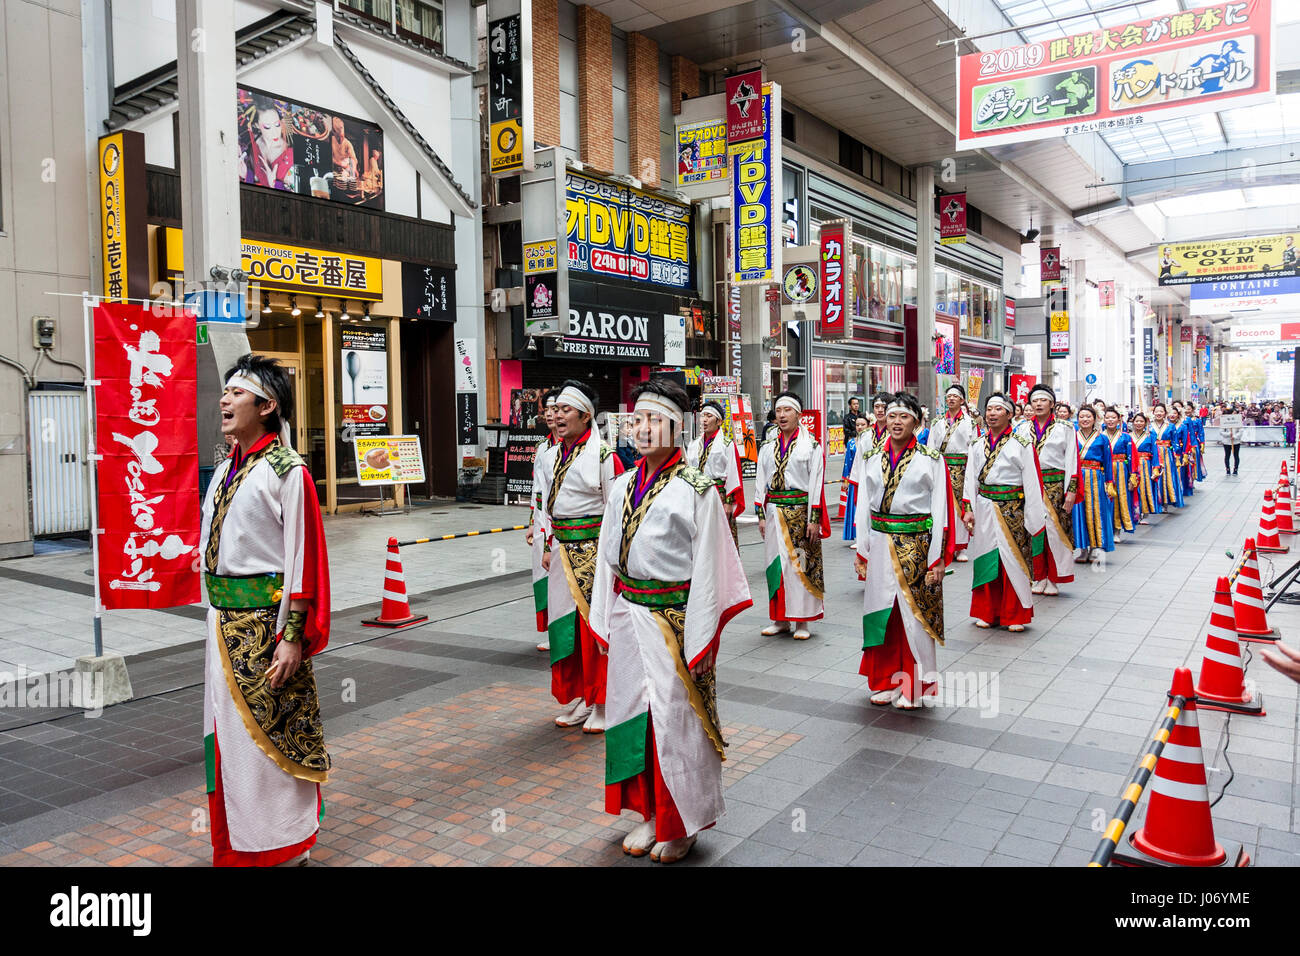 Japan, Kumamoto, Hinokuni Yosakoi dance festival. Dancing team in elaborate yukata and kimono costumes, in 2 lines, standing in shopping mall. Stock Photo